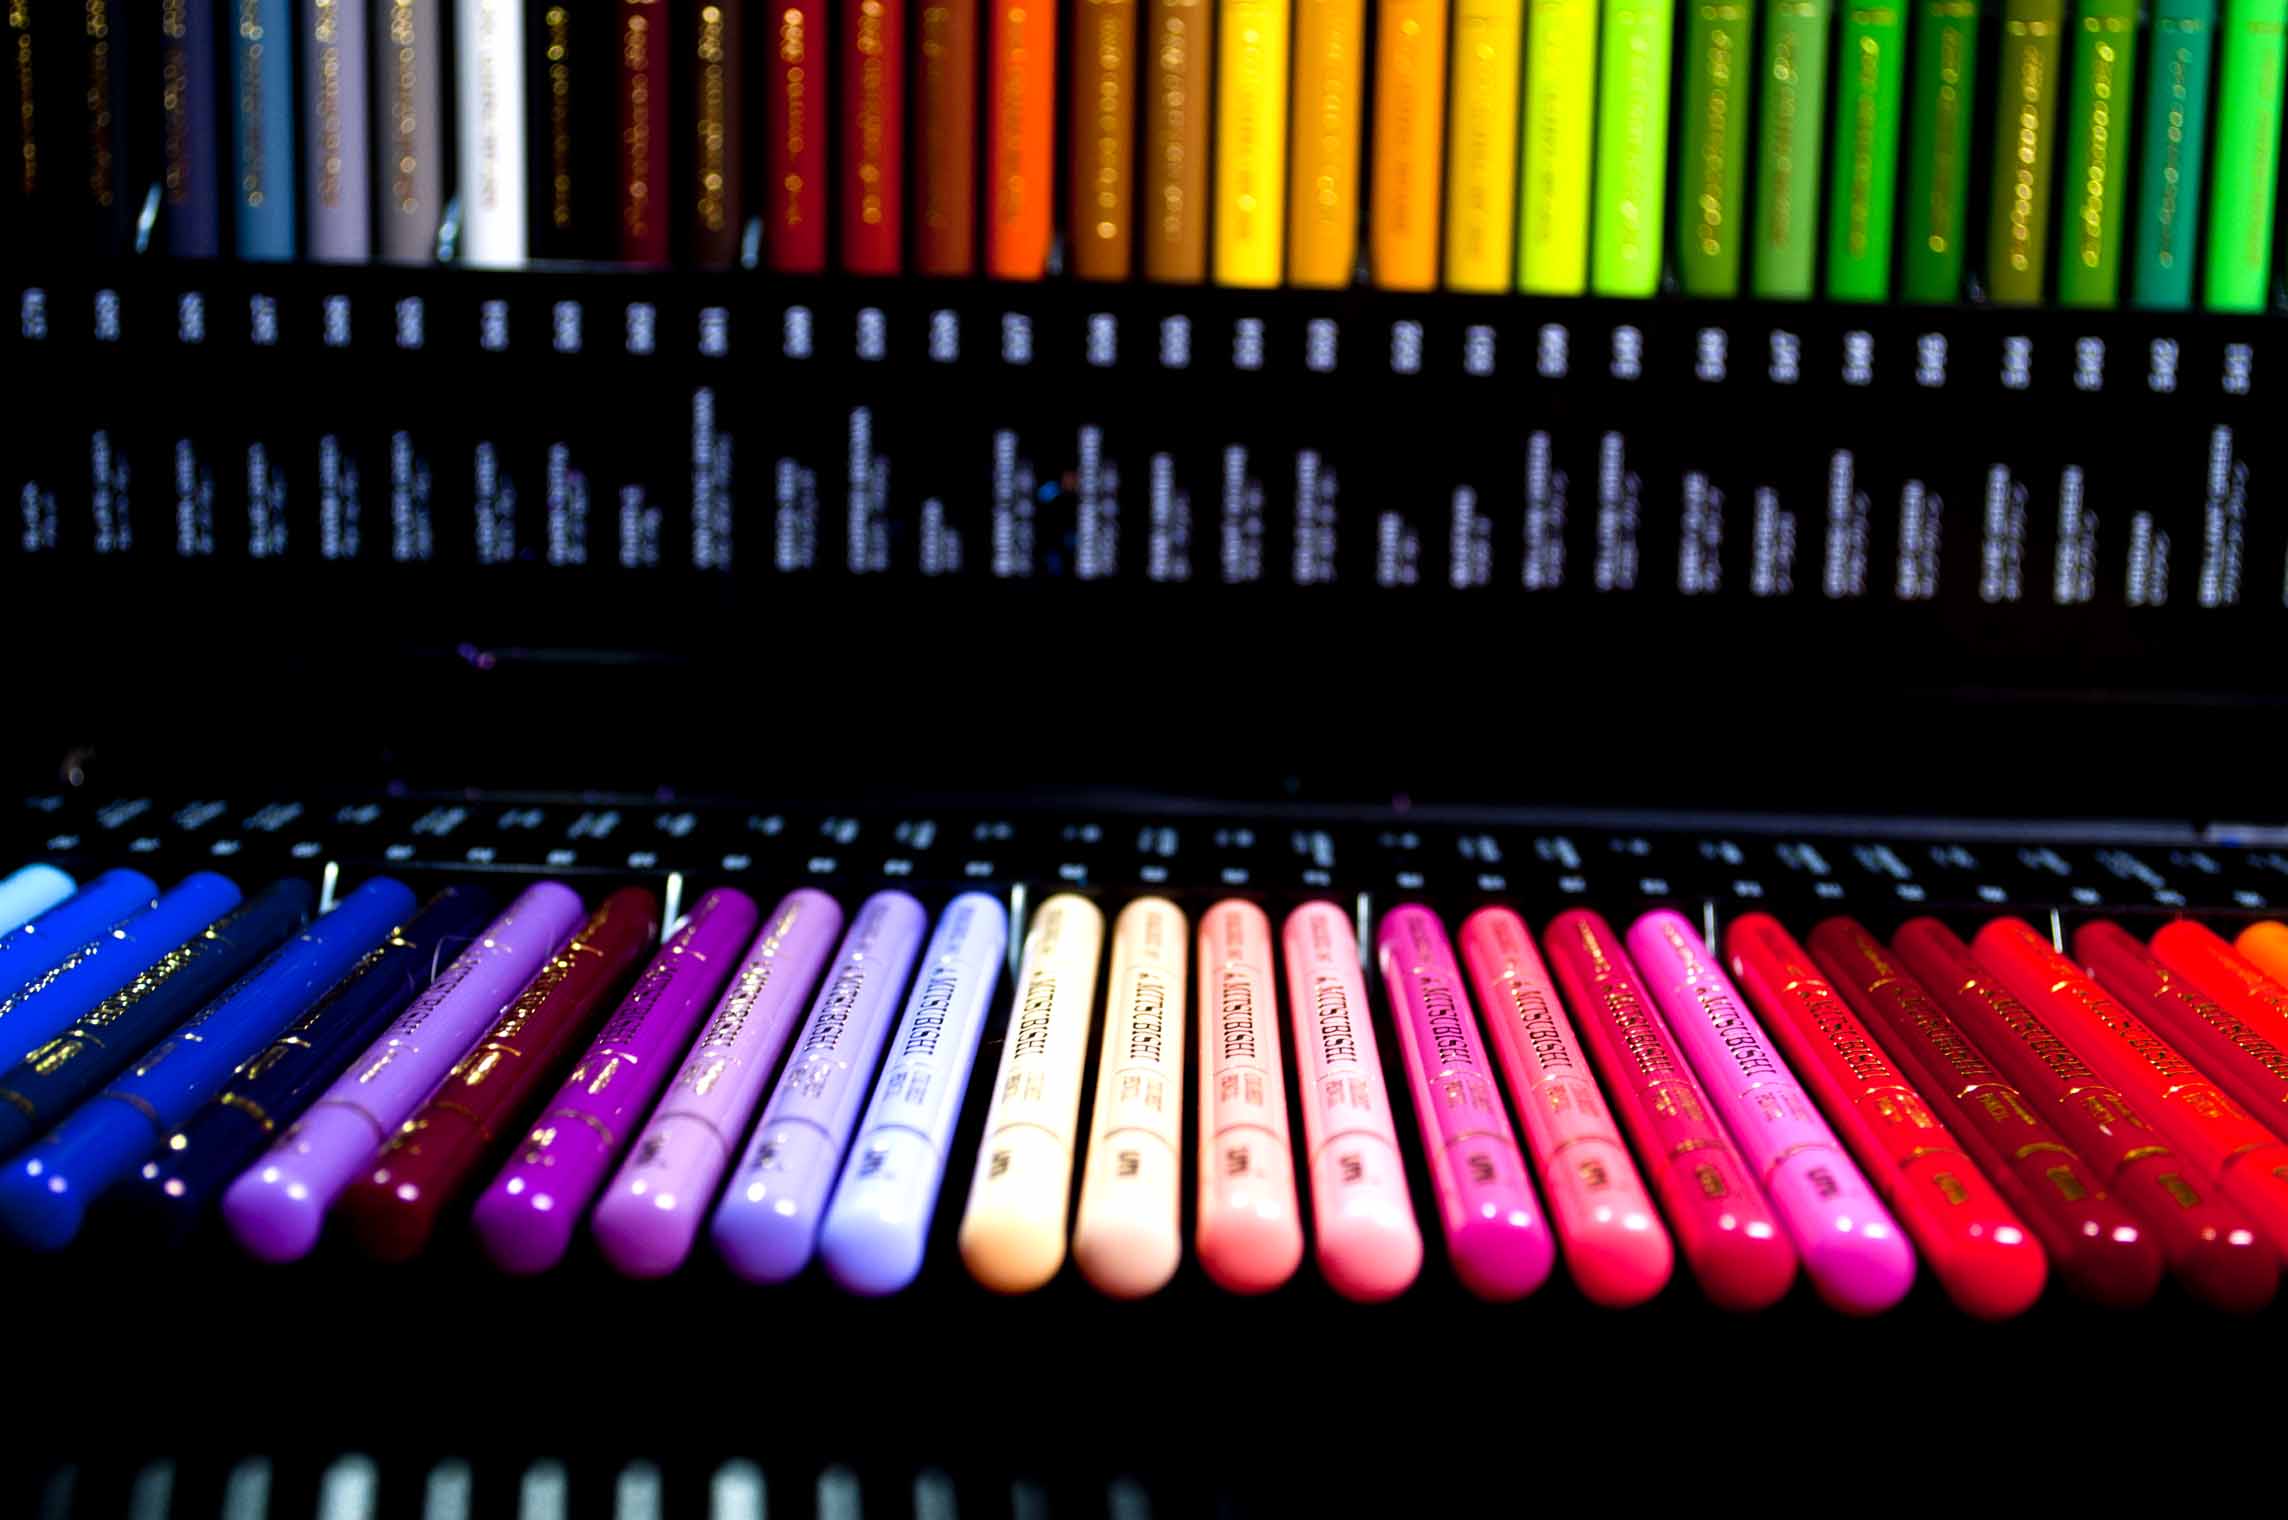 NEW Mitsubishi Pencil Uni Colored Pencils 100 Colors Set From JAPAN